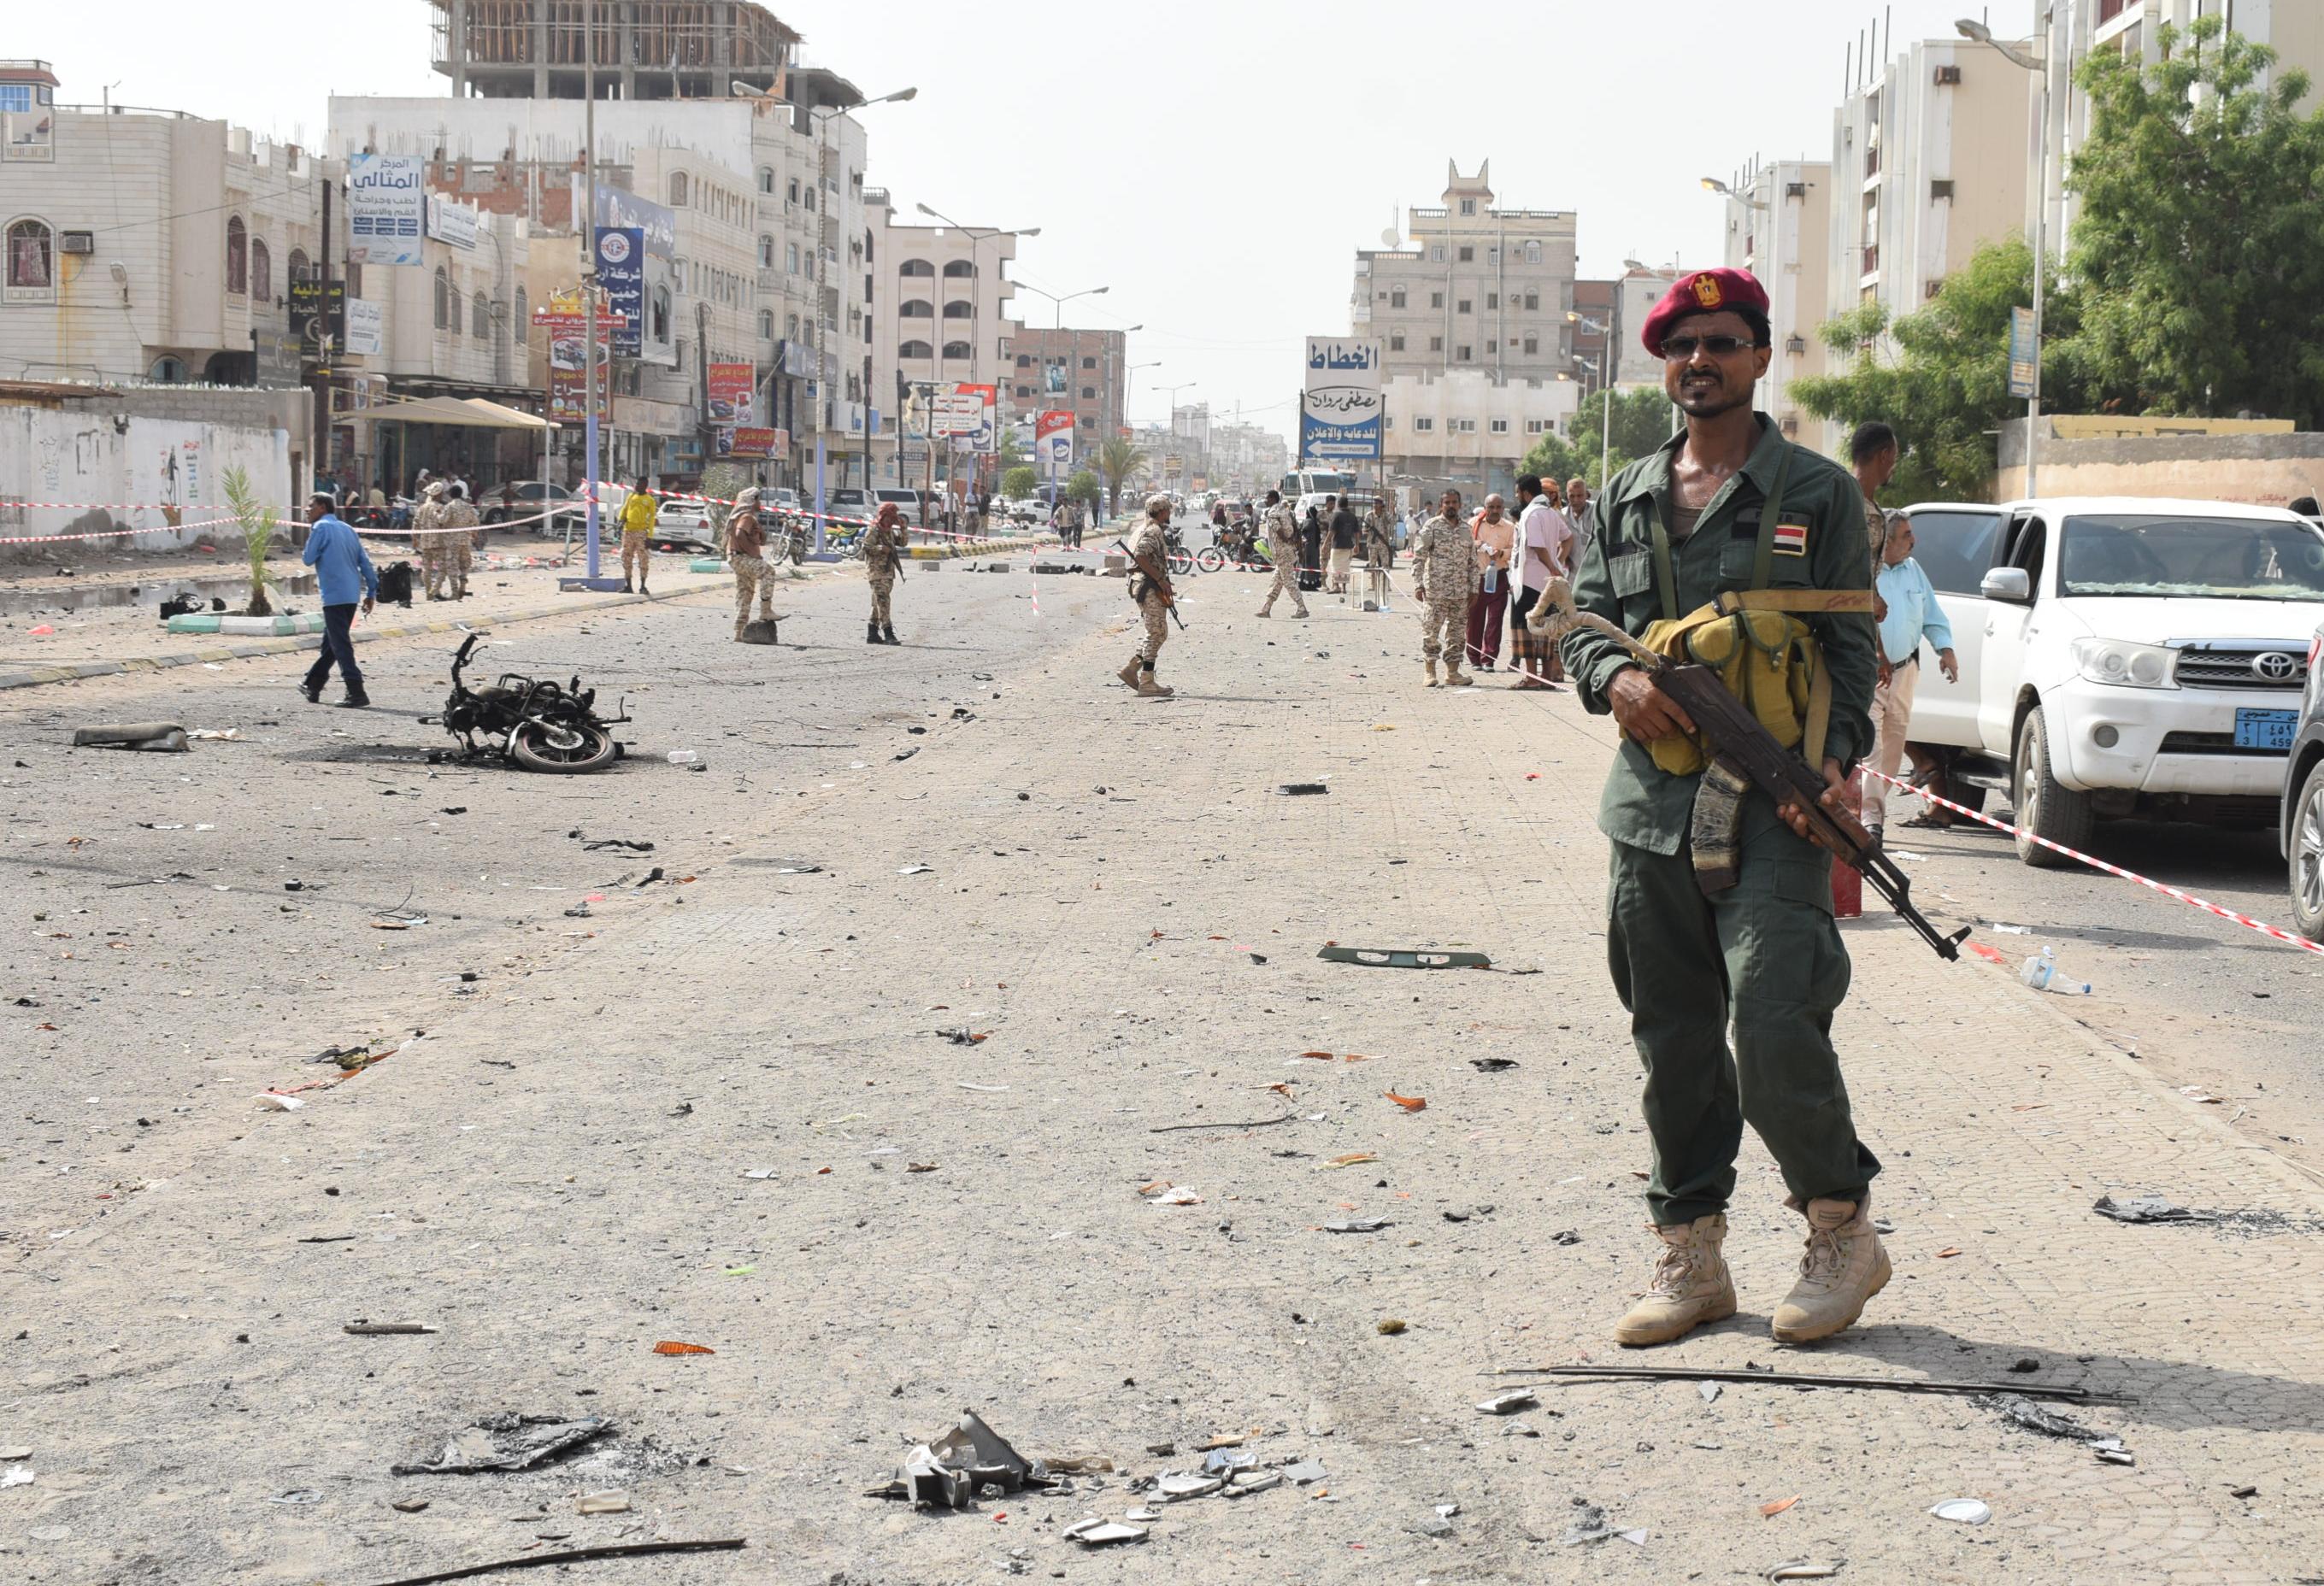 Unknown gunmen opened fire:Yemeni